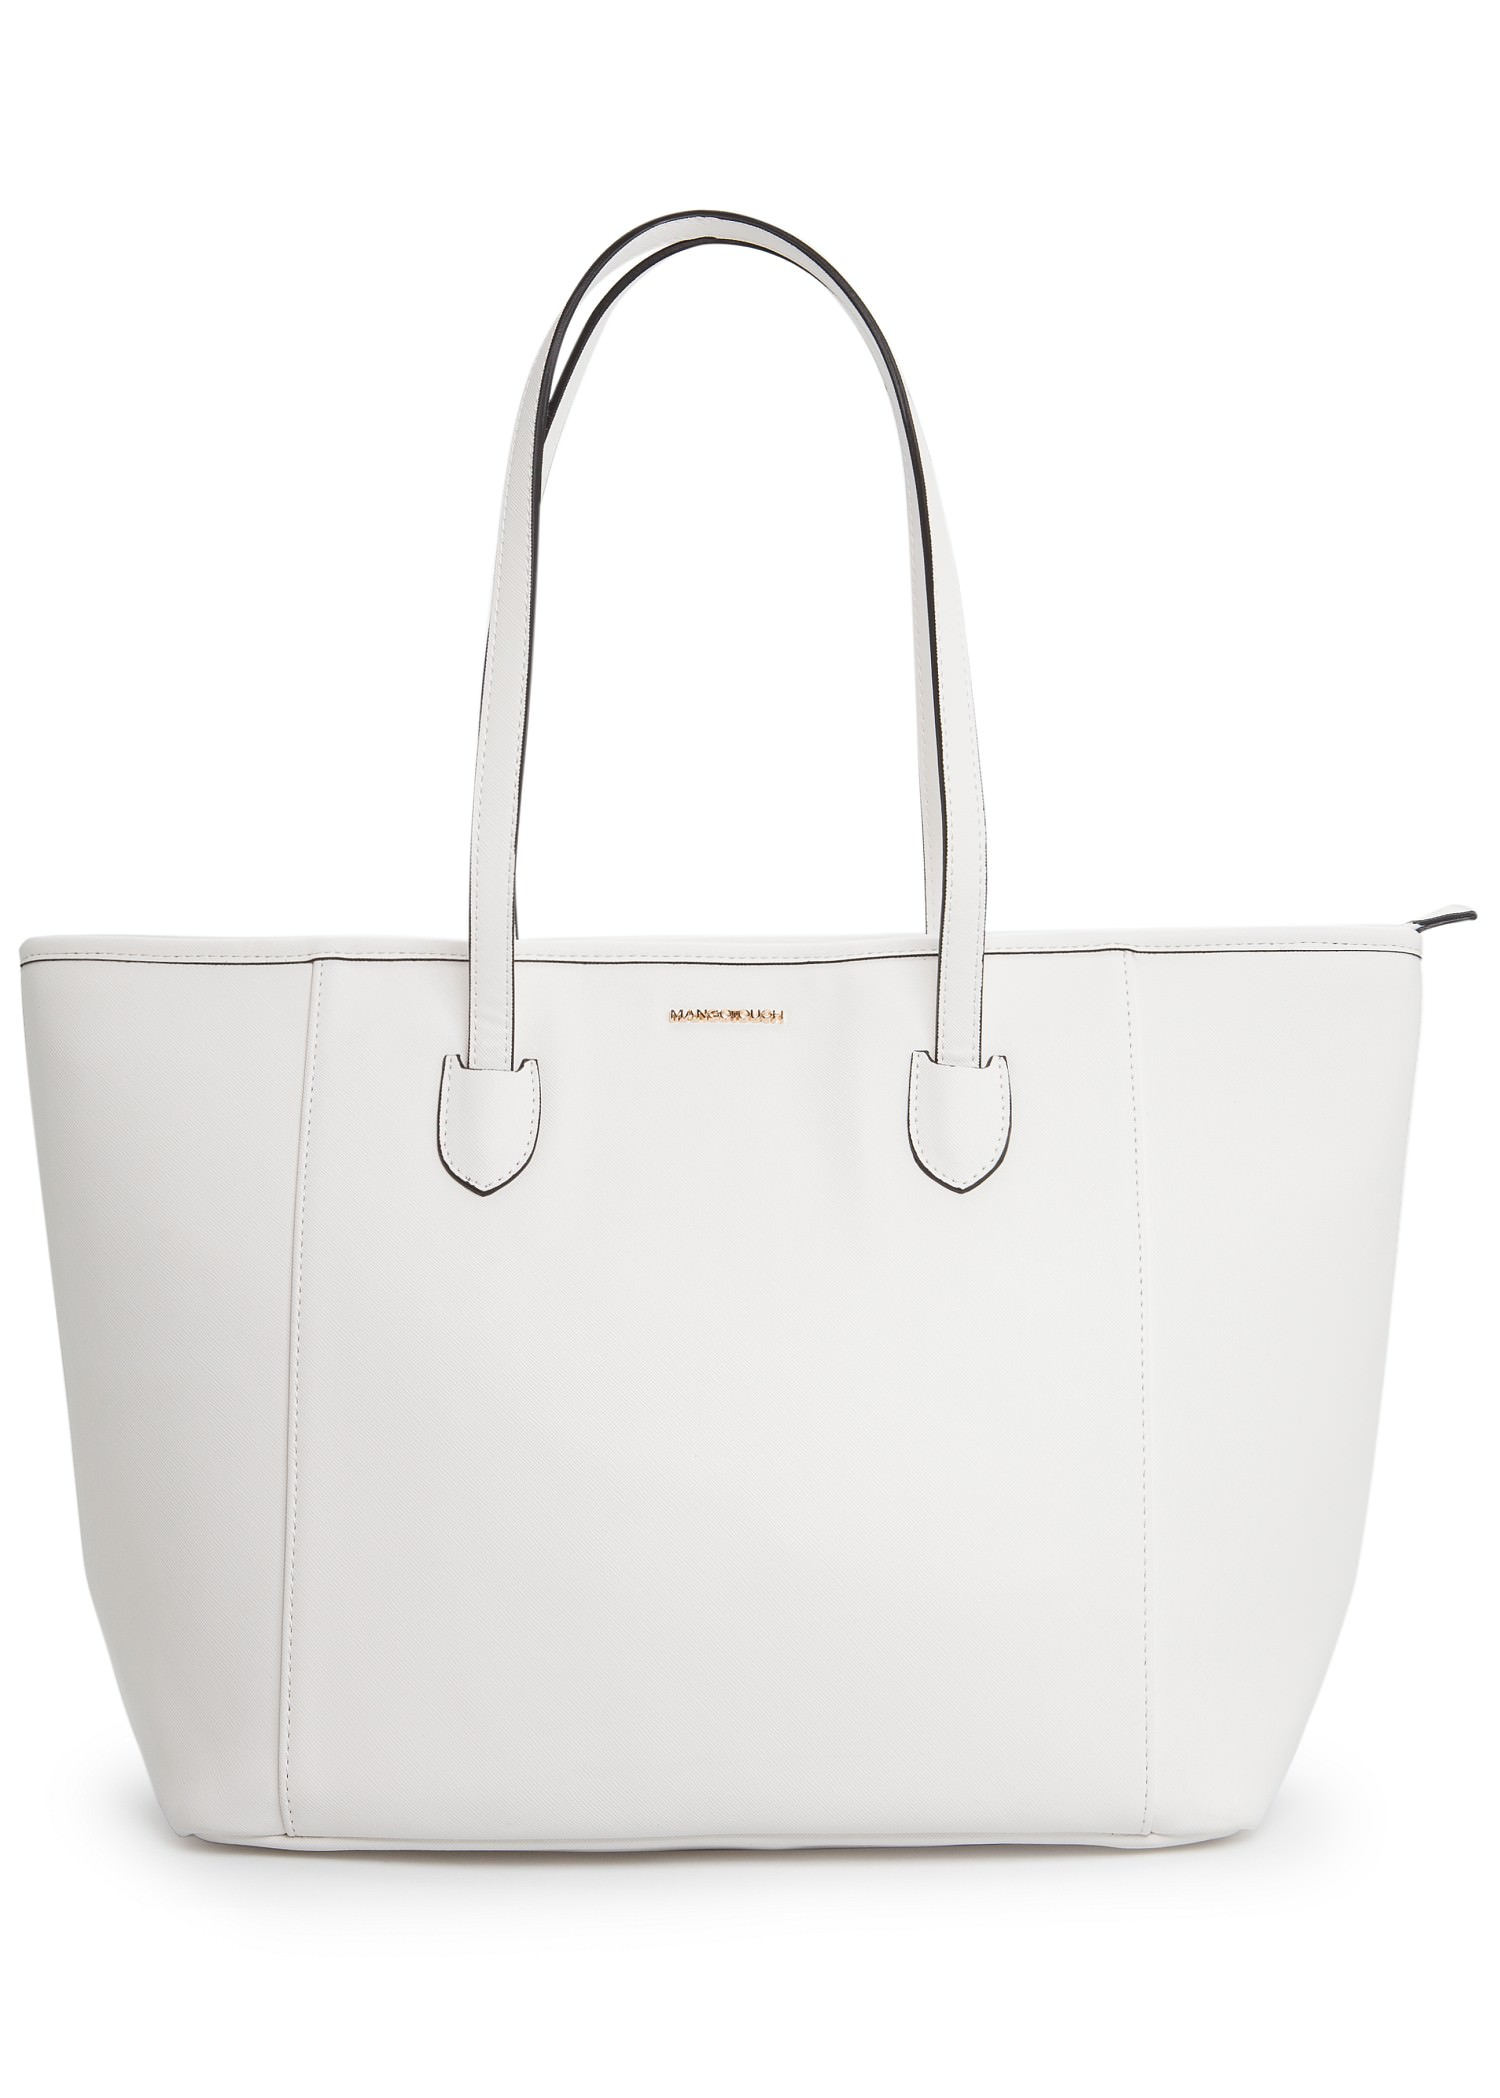 Lyst - Mango Saffianoeffect Shopper Bag in White